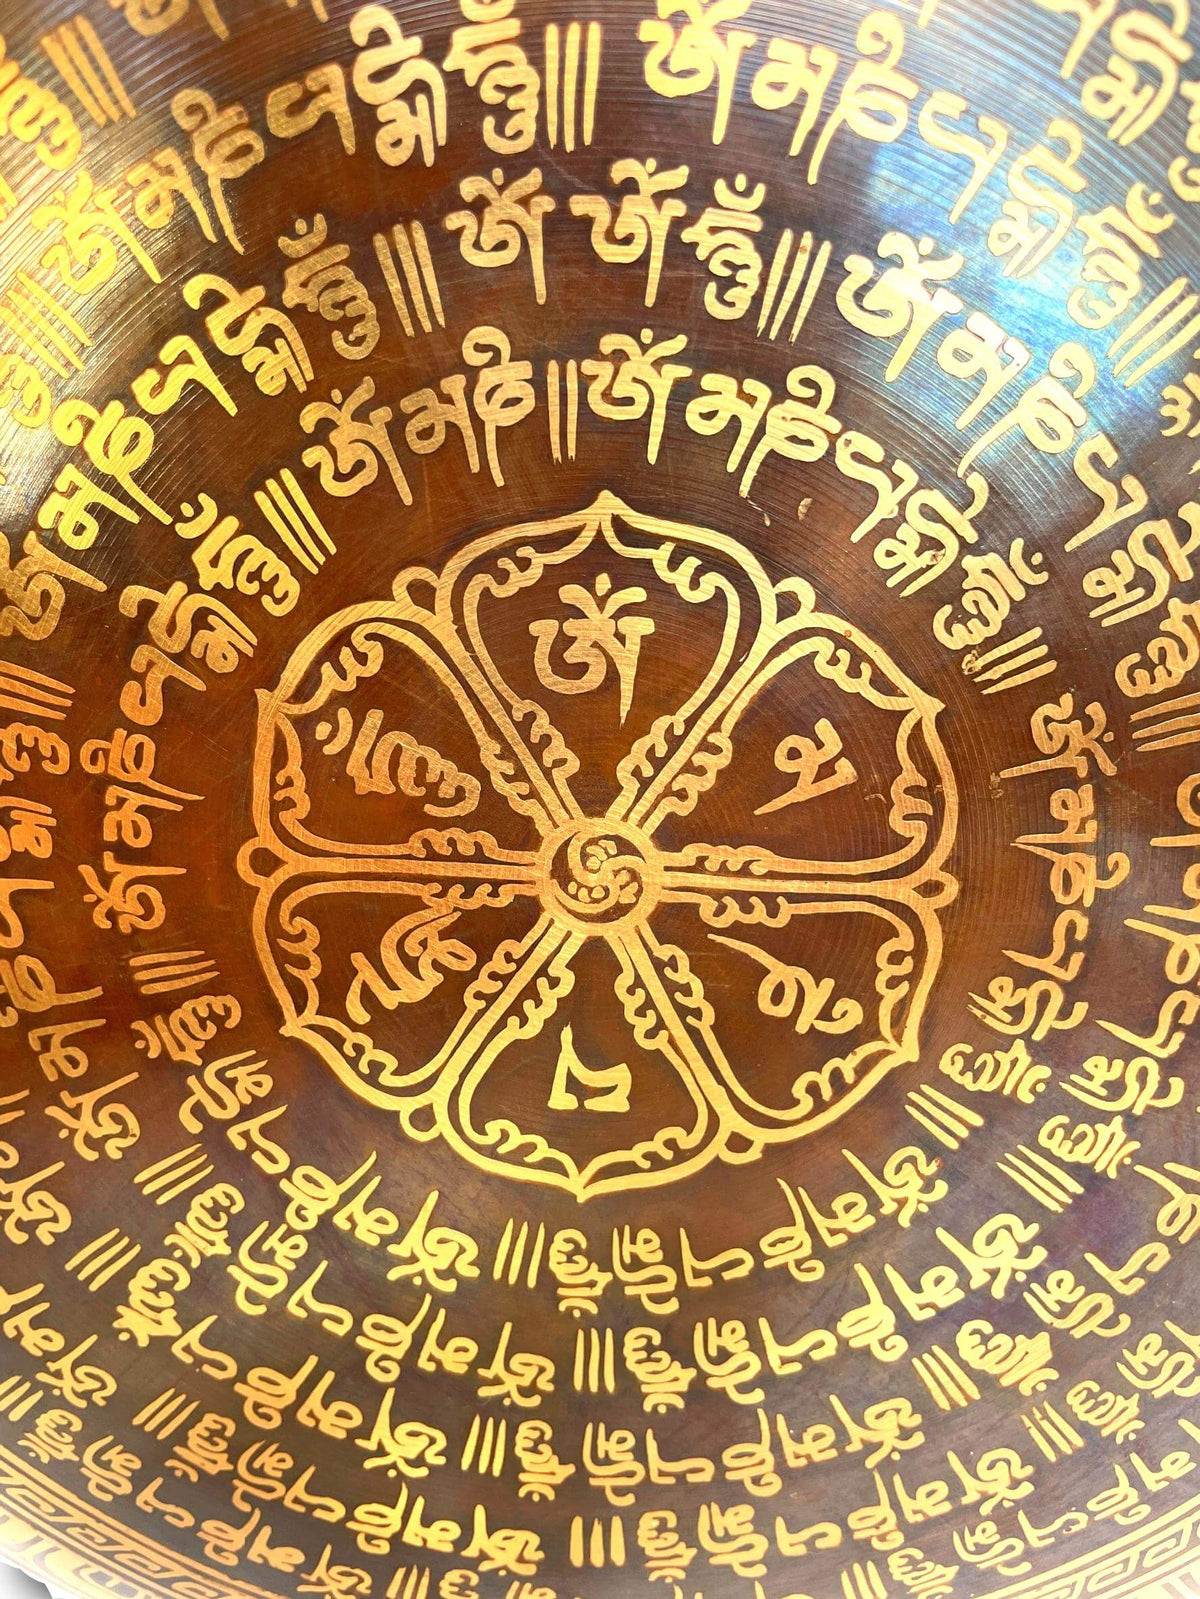 Genuine Buddhist Gong, Om Mani Padme Hum Mantra - Handmade In Nepal